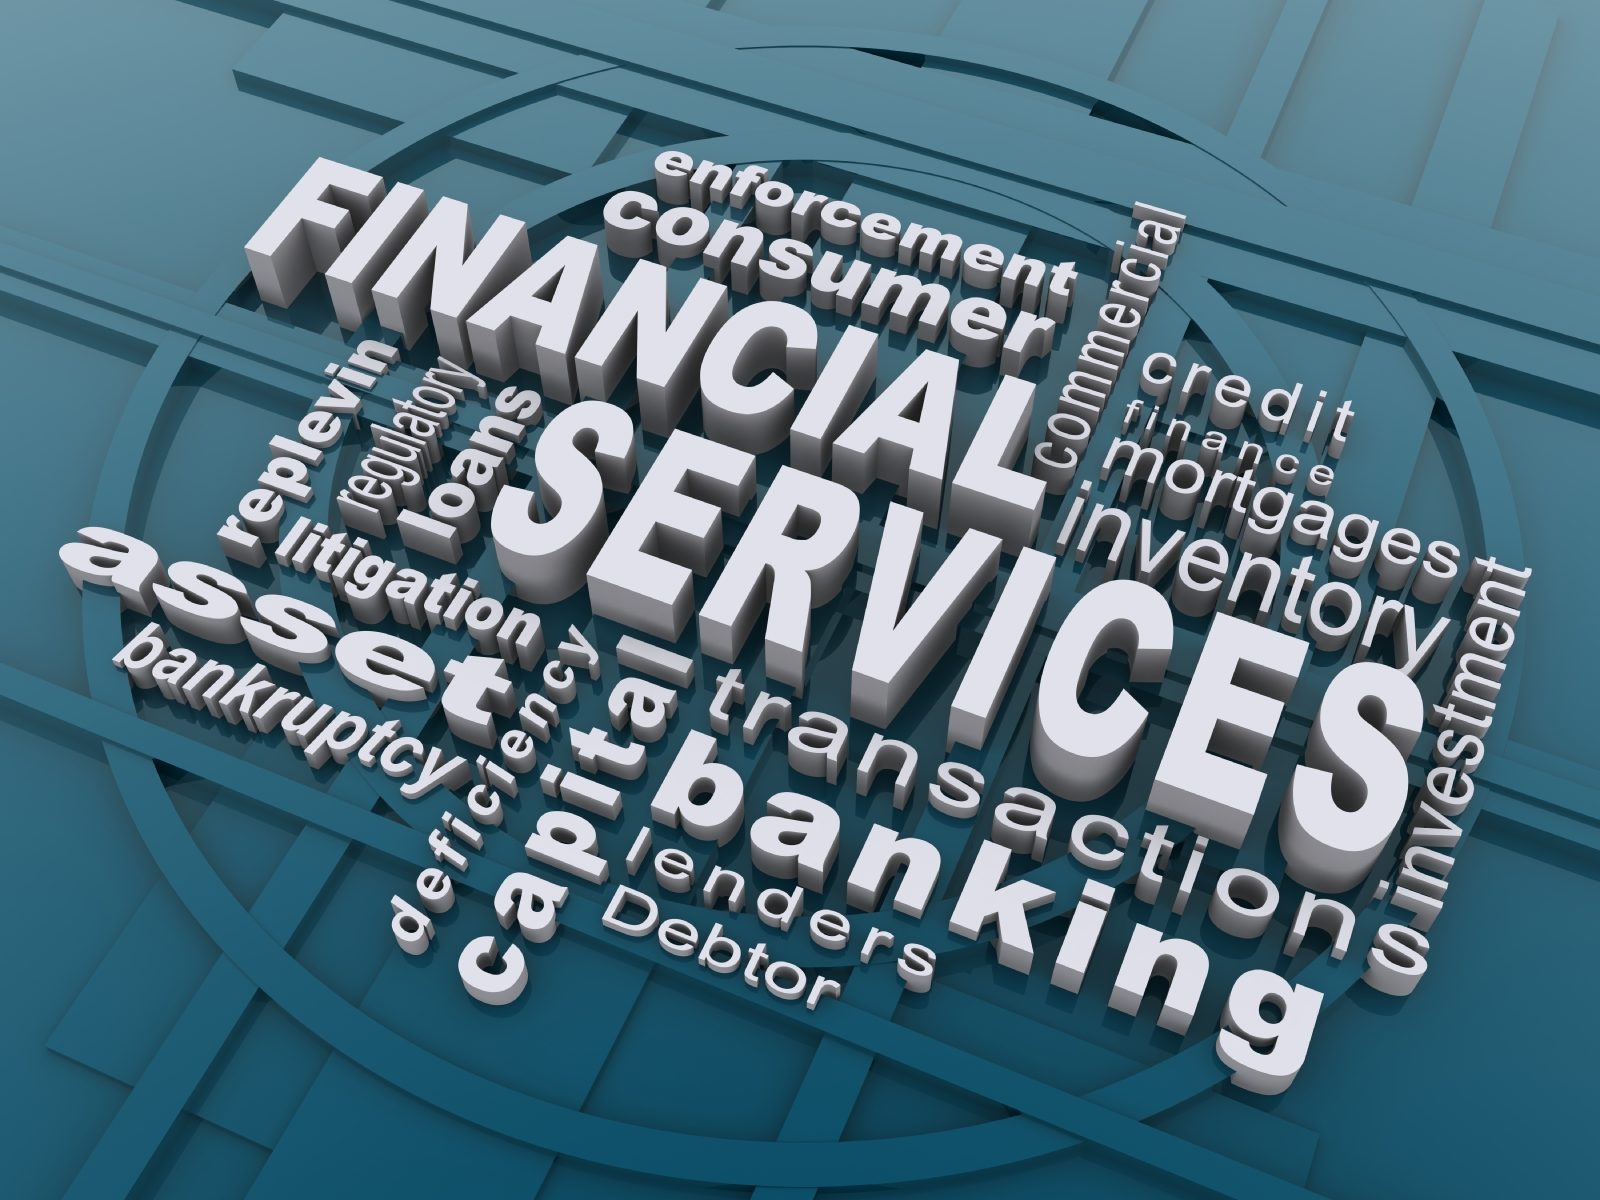 service finance